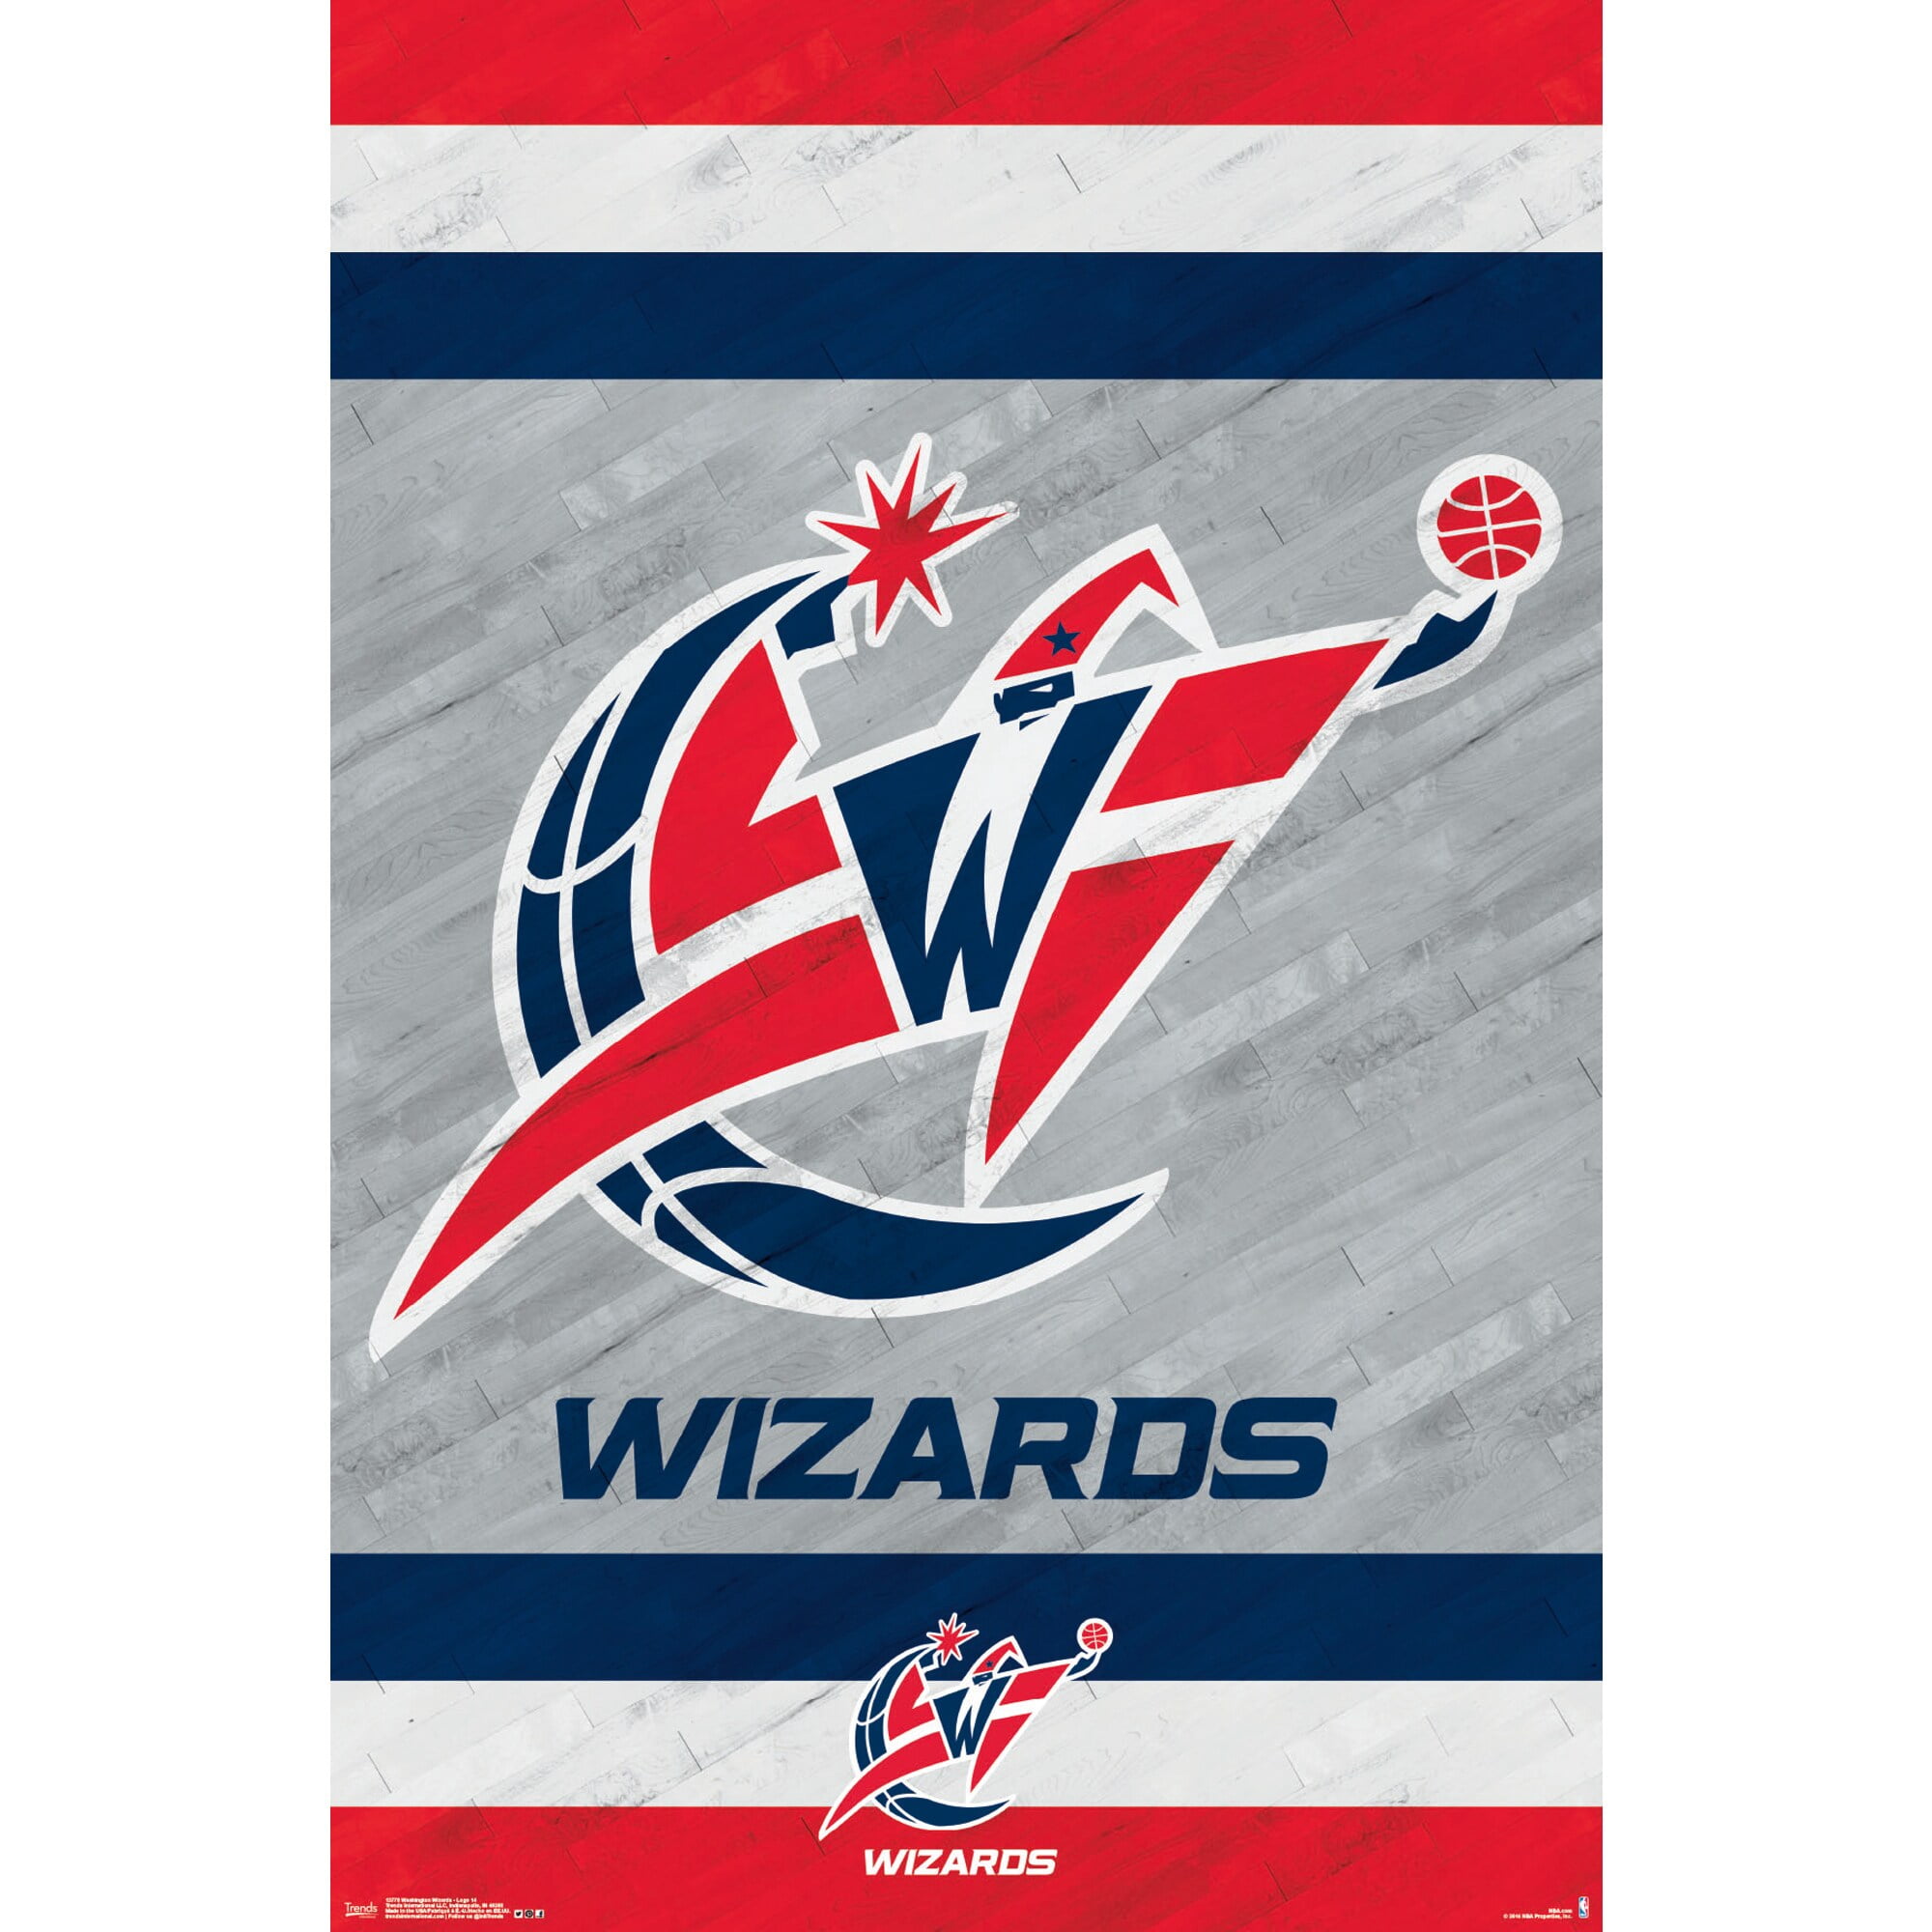 Washington Wizards wallpaper